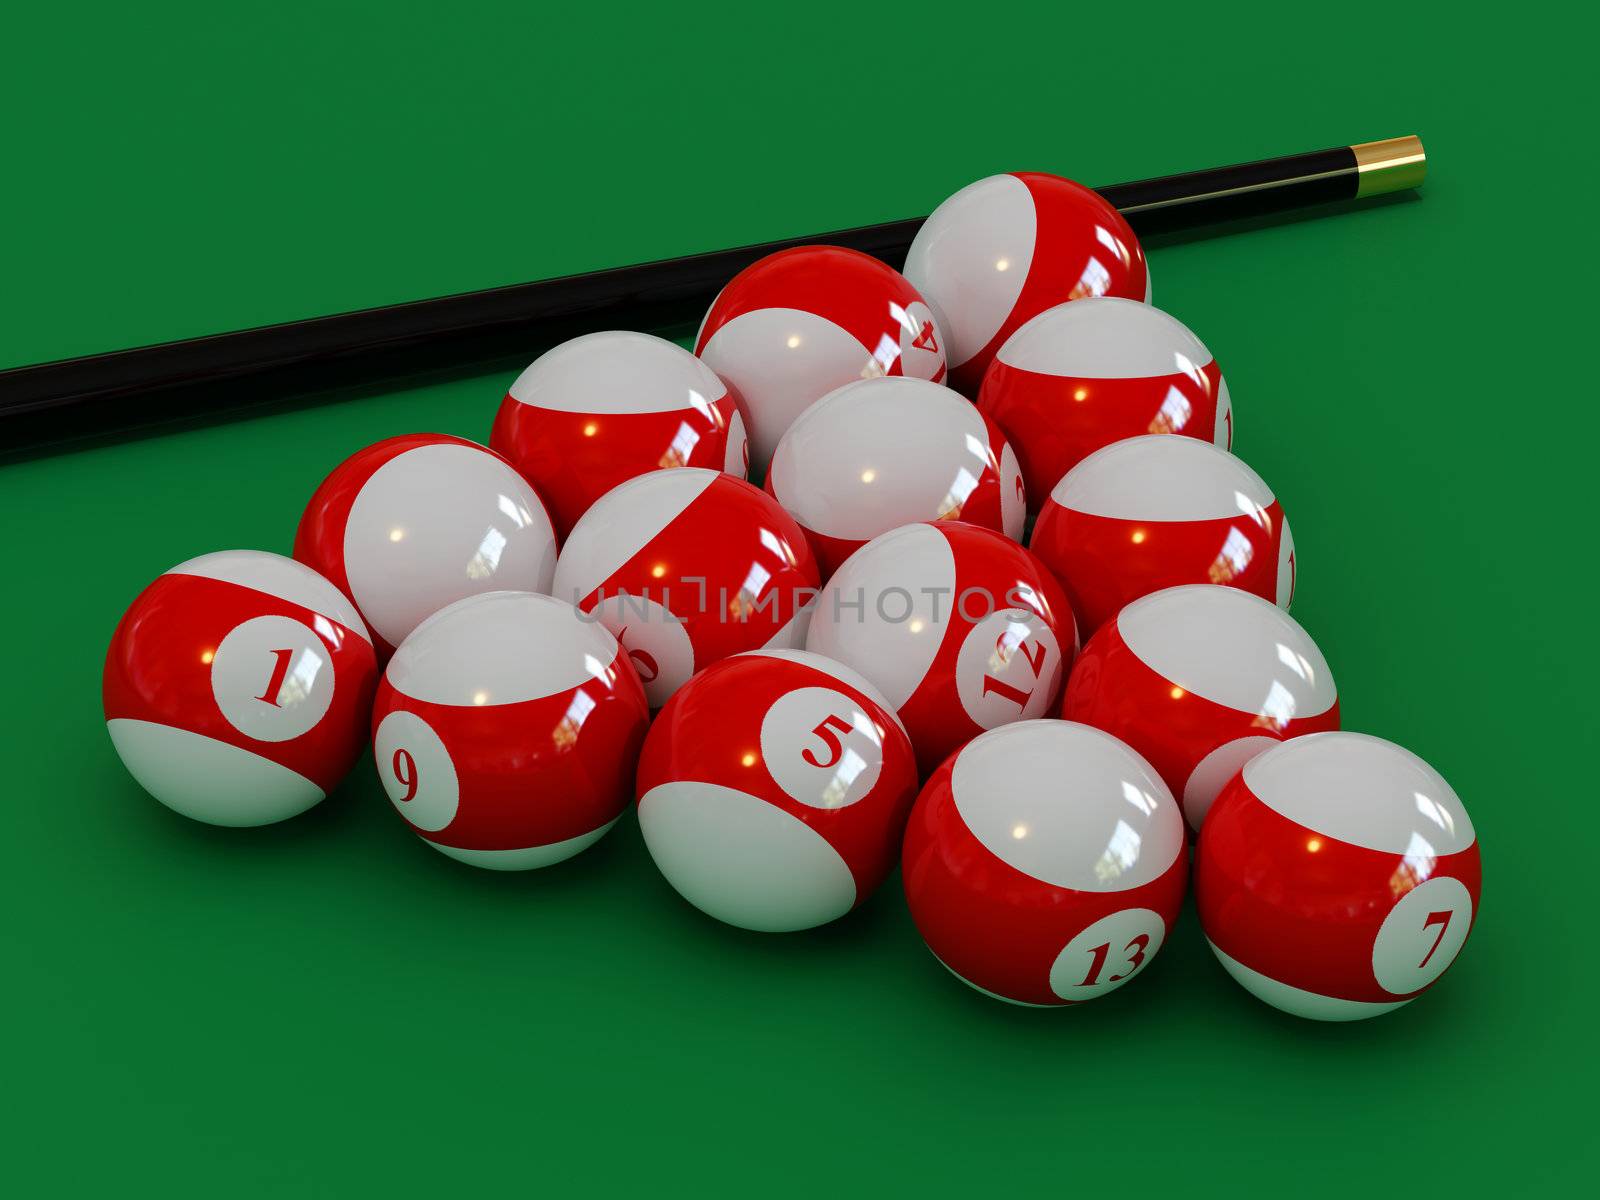 High resolution image billiard table. 3d illustration. Green background.